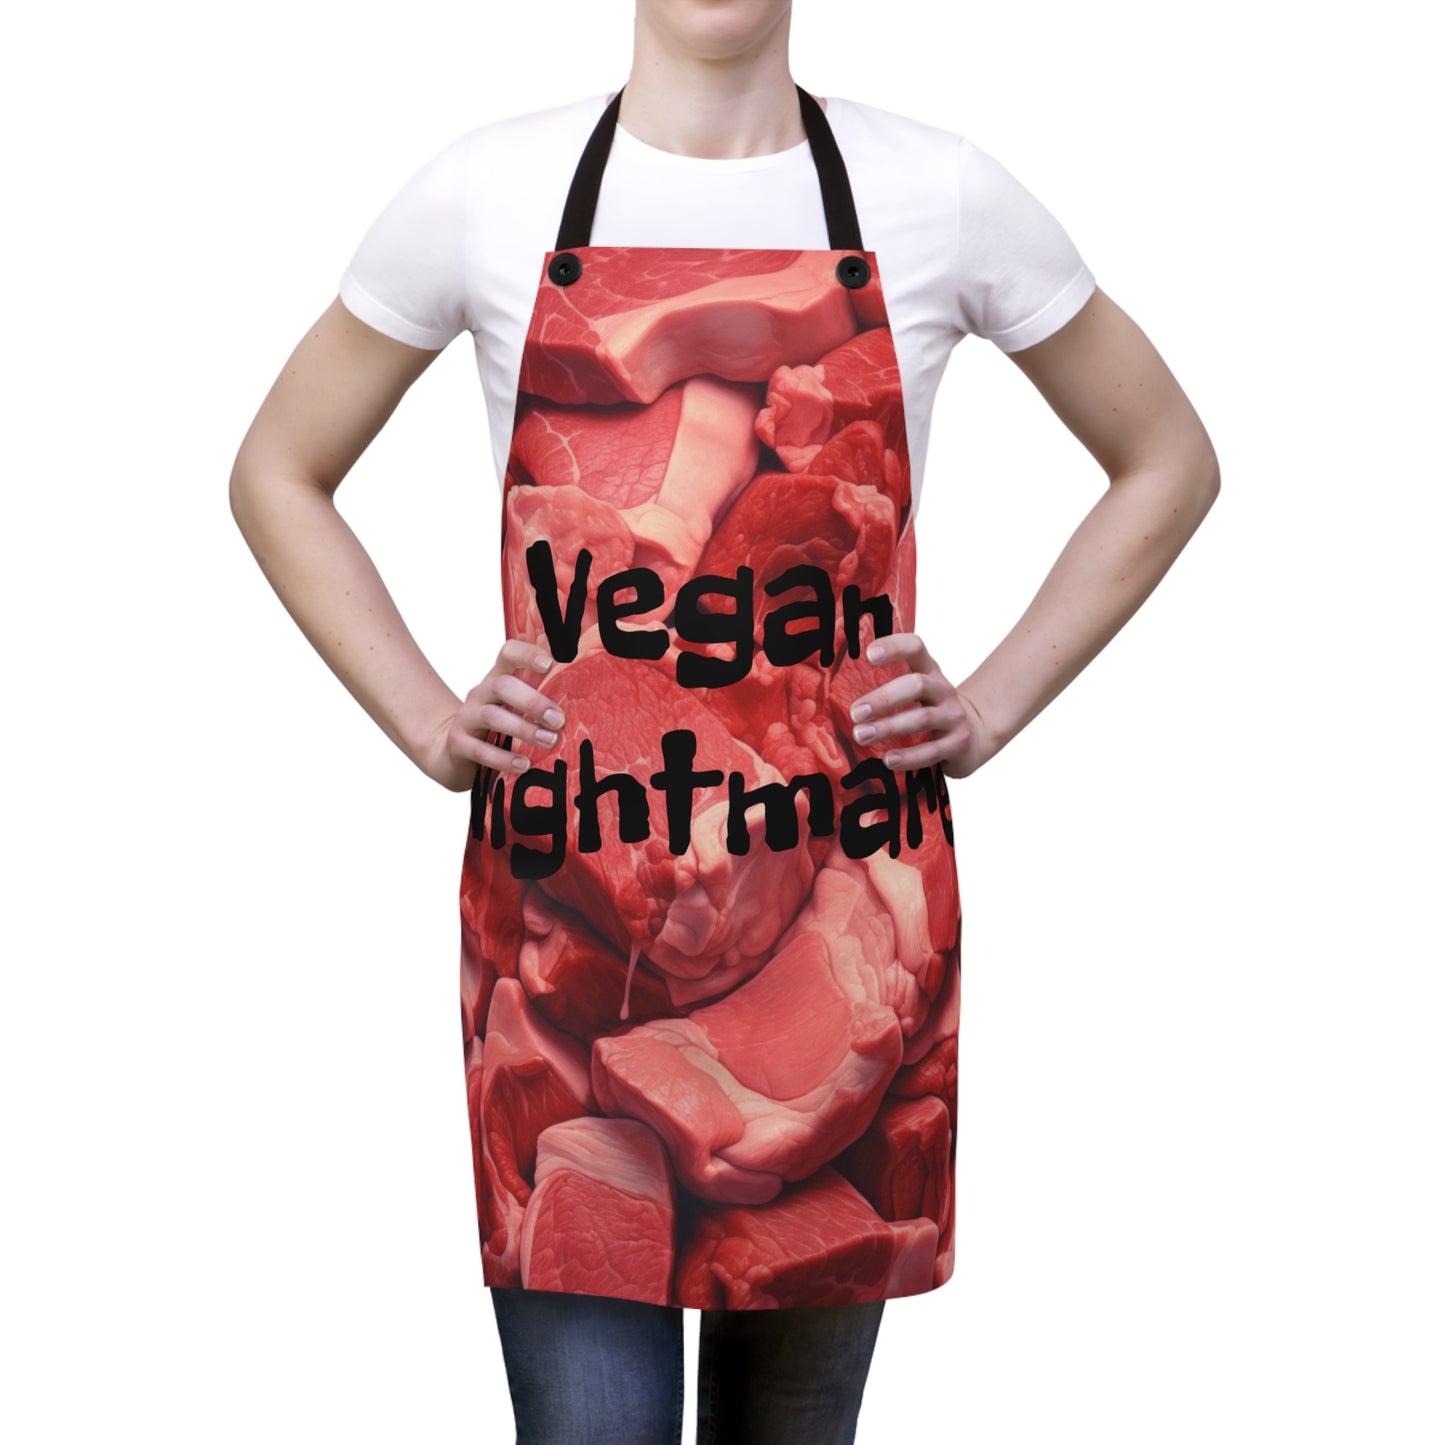 Vegan Nightmare Apron